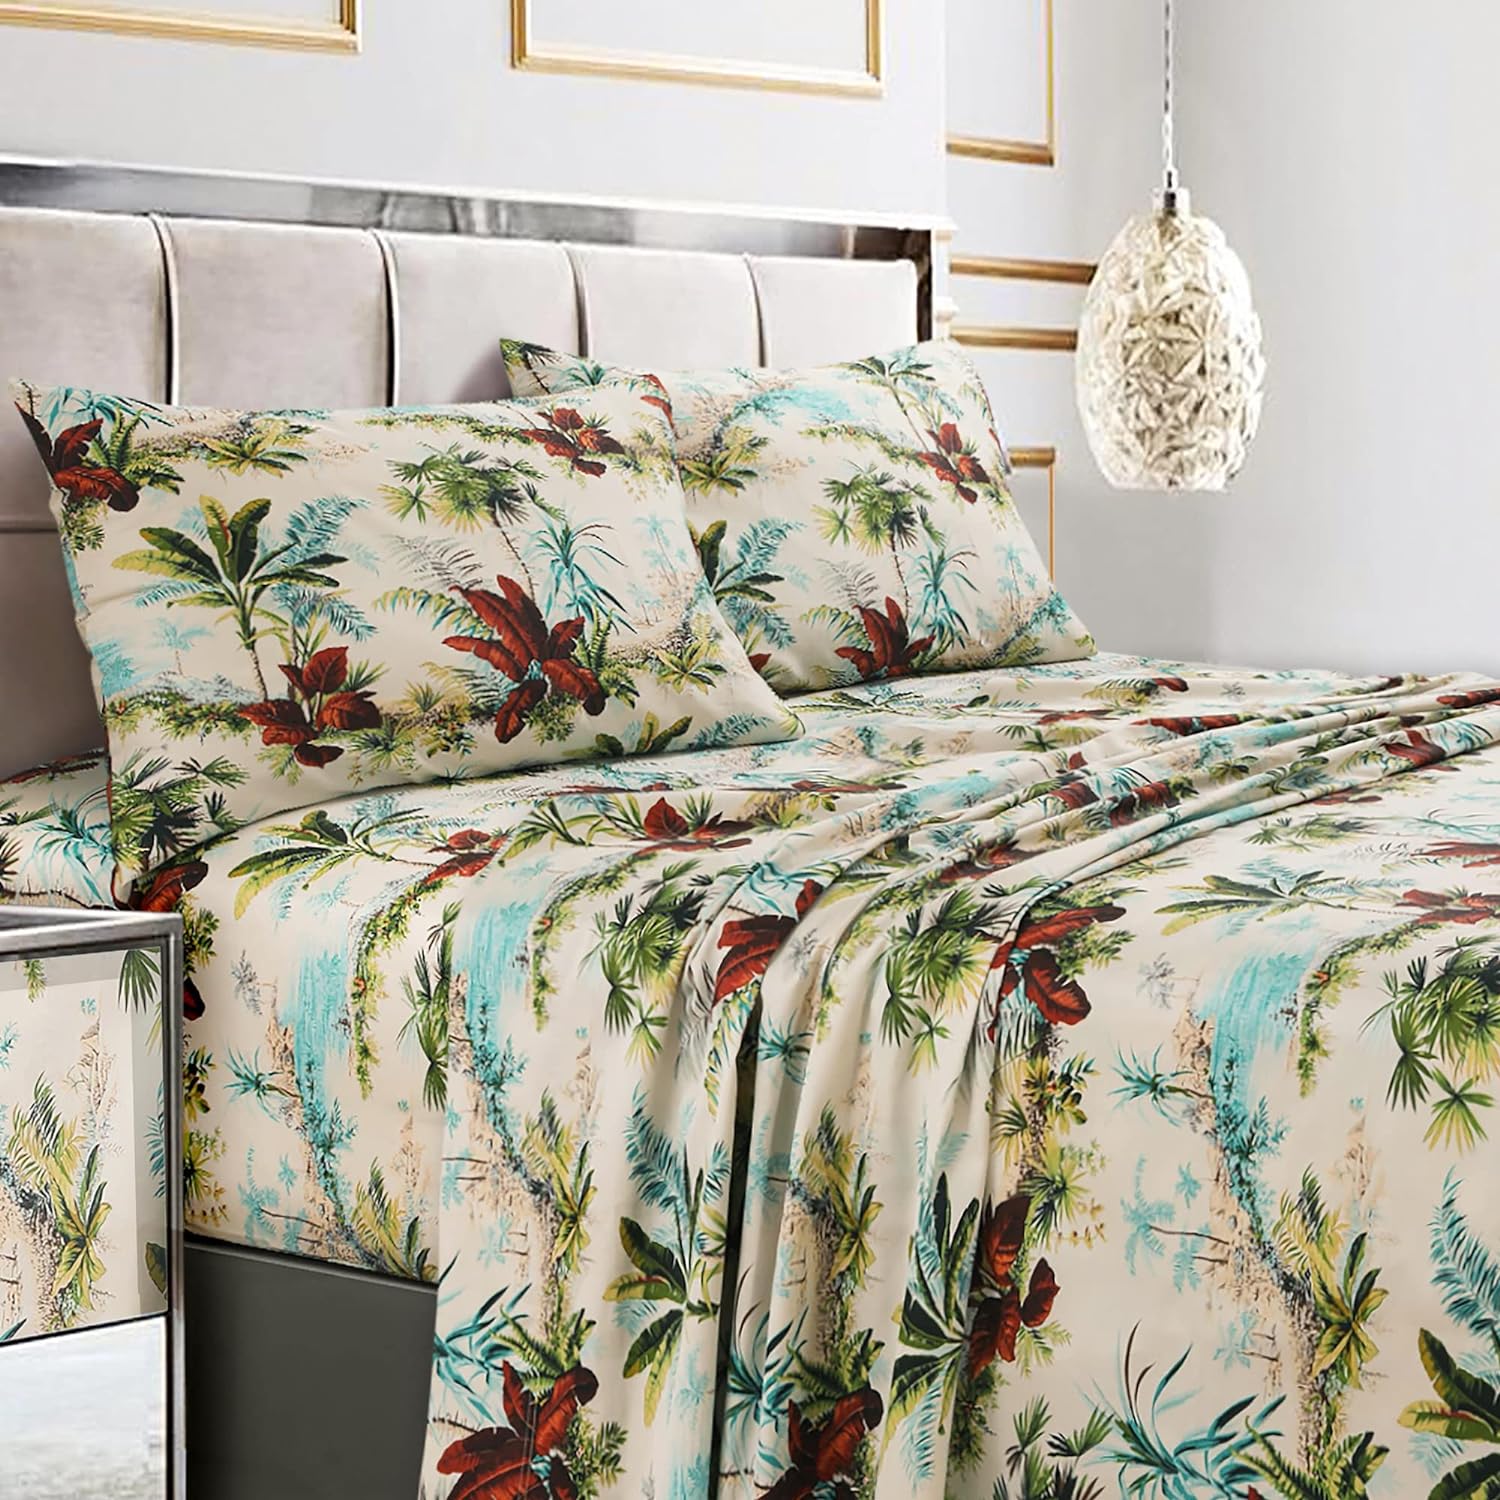 Tribeca Living Queen Bed Sheet Set, Soft Cotton Sateen Printed Sheets Tropical Print, Extra Deep Pocket, 300 Thread Count, 4-Piece Bedding Sets, Paradise Island Multi, (PARAISL4PSSQU)